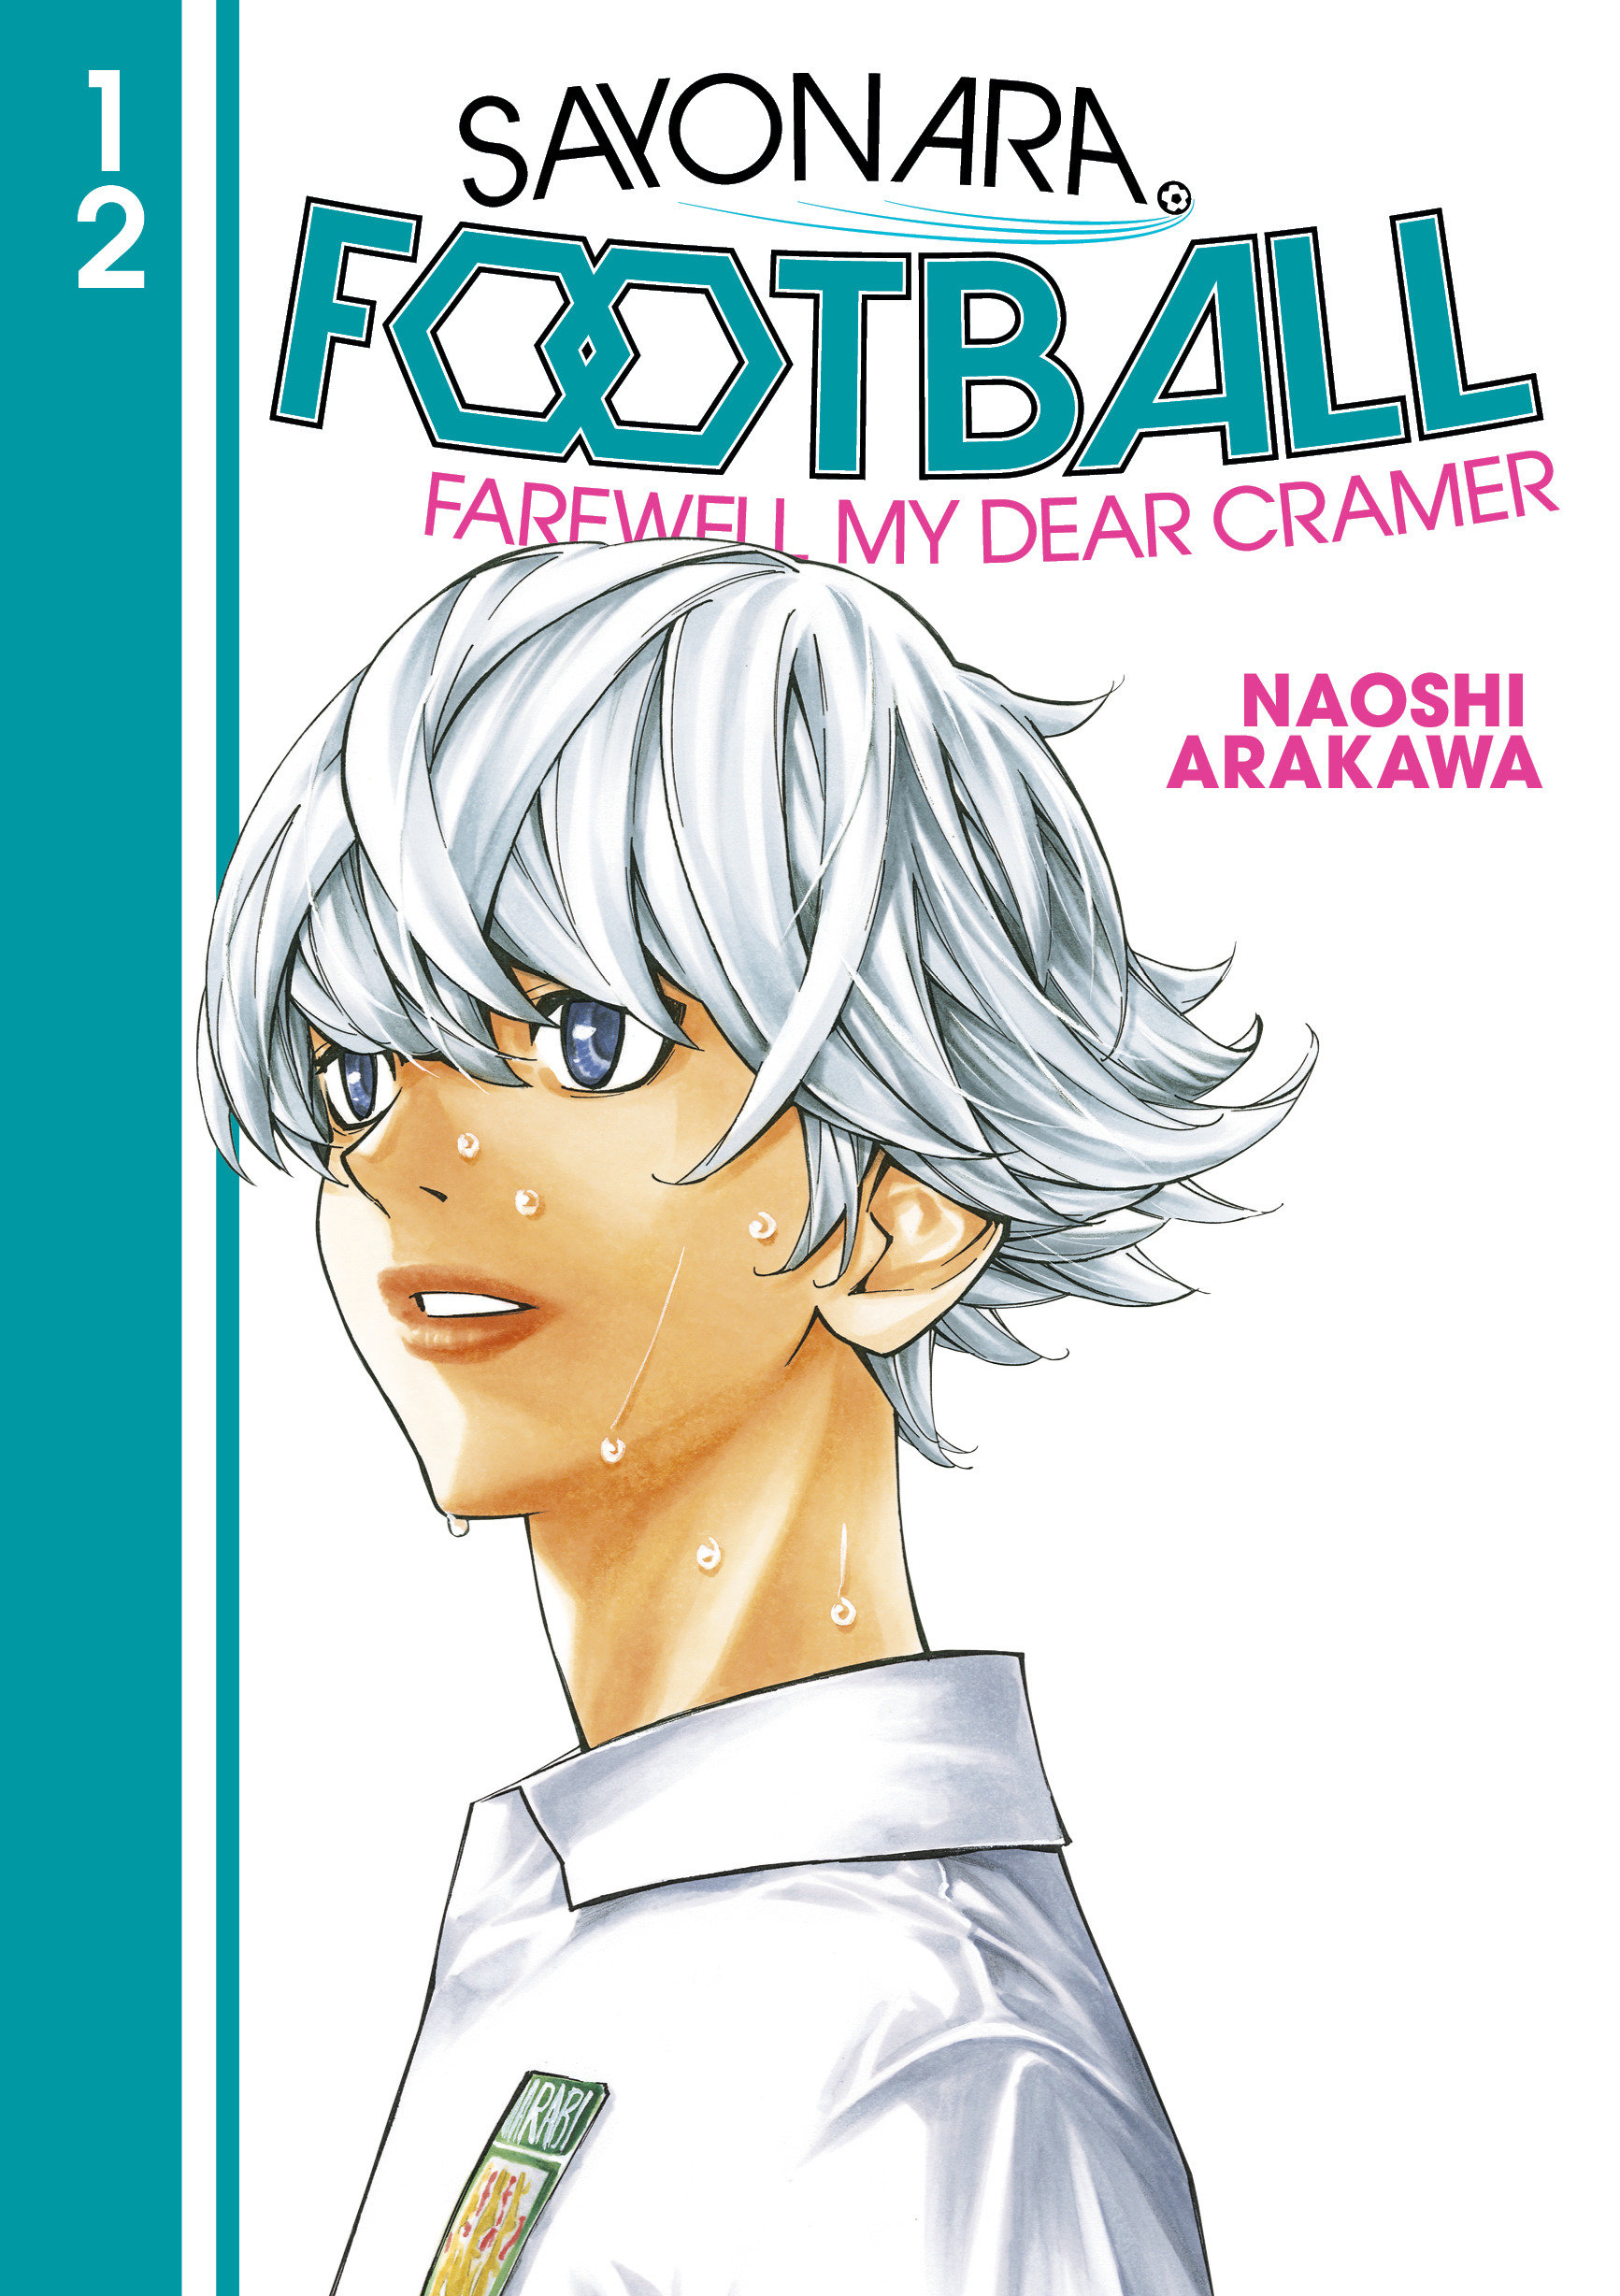 Sayonara Football Manga Volume 12